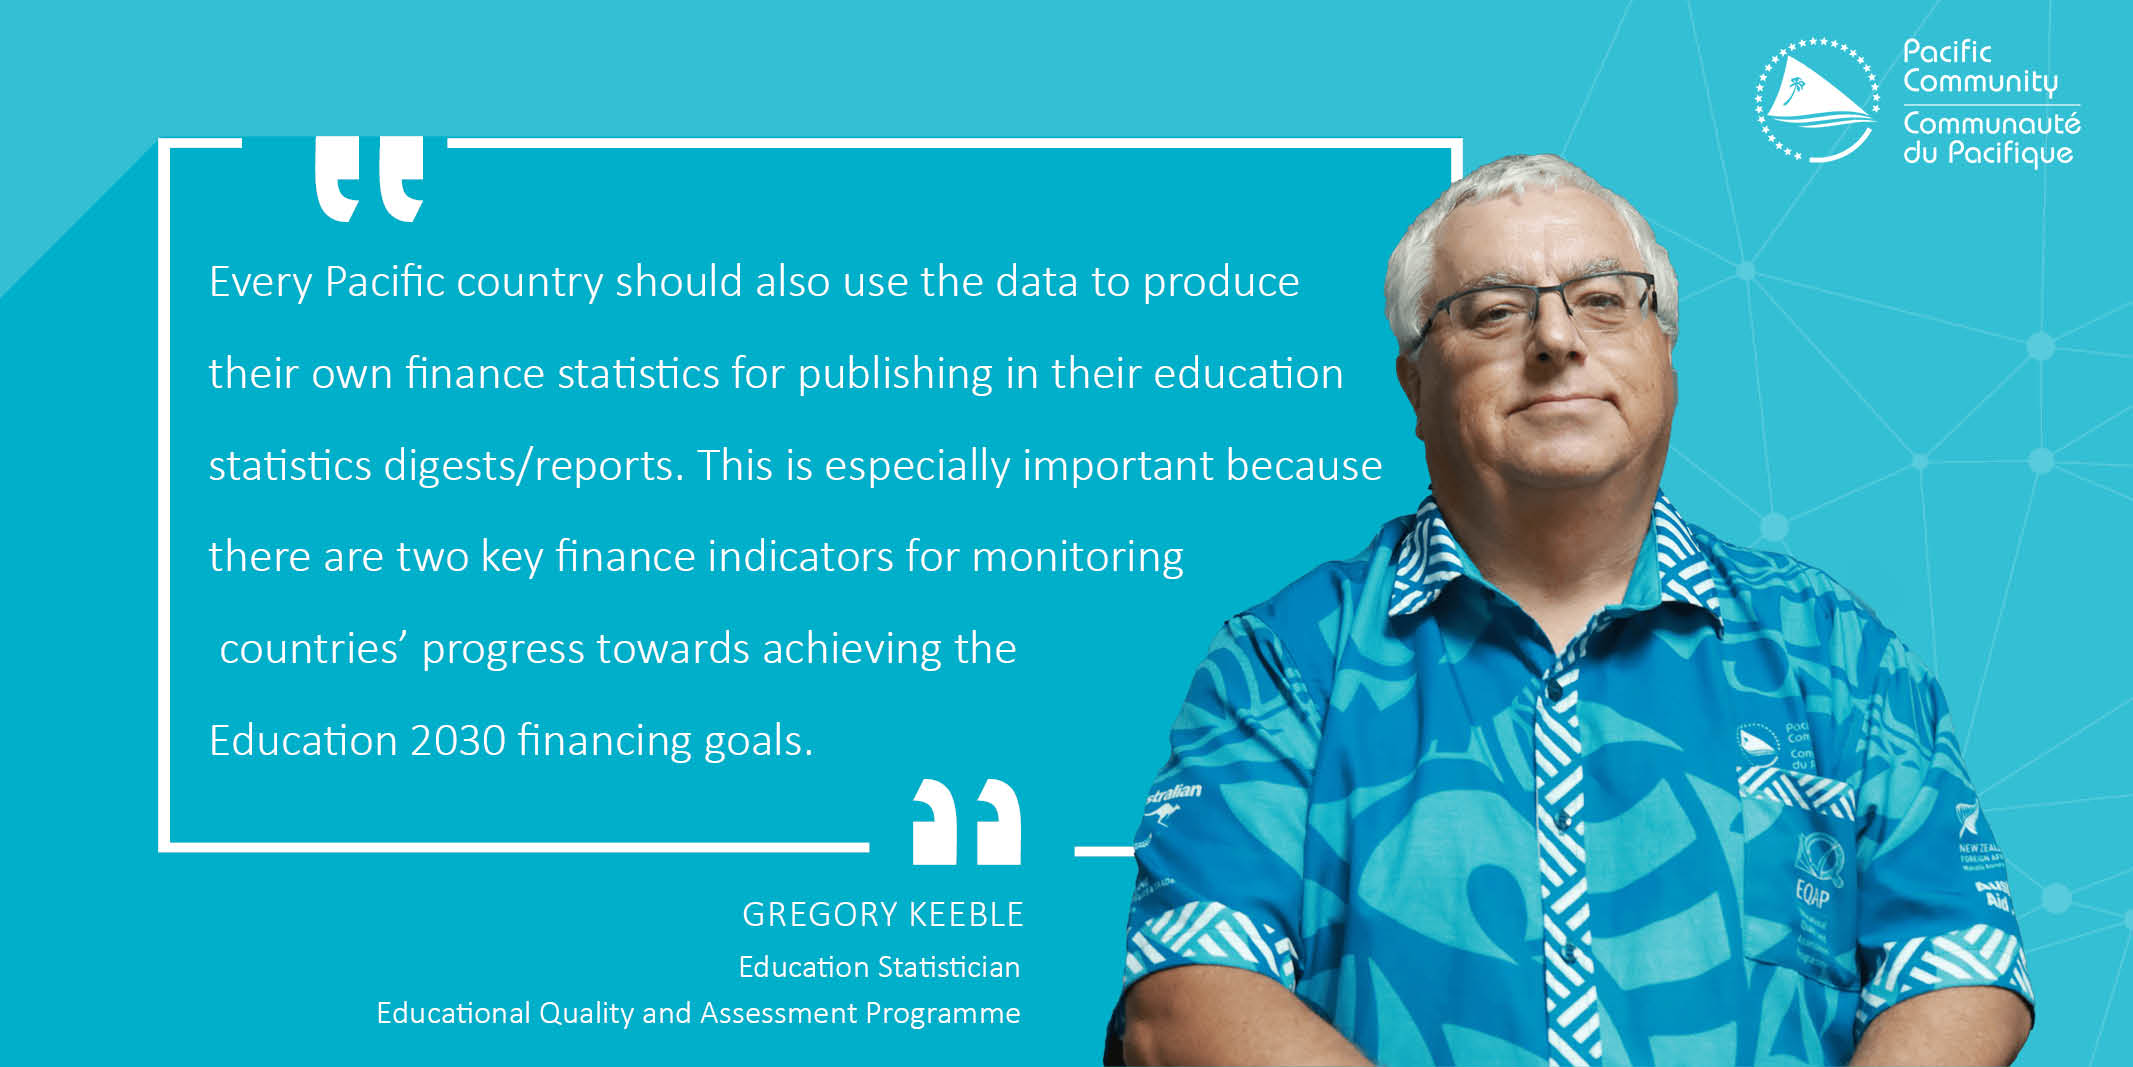 Gregory Keeble, Education Statistician, EQAP, SPC